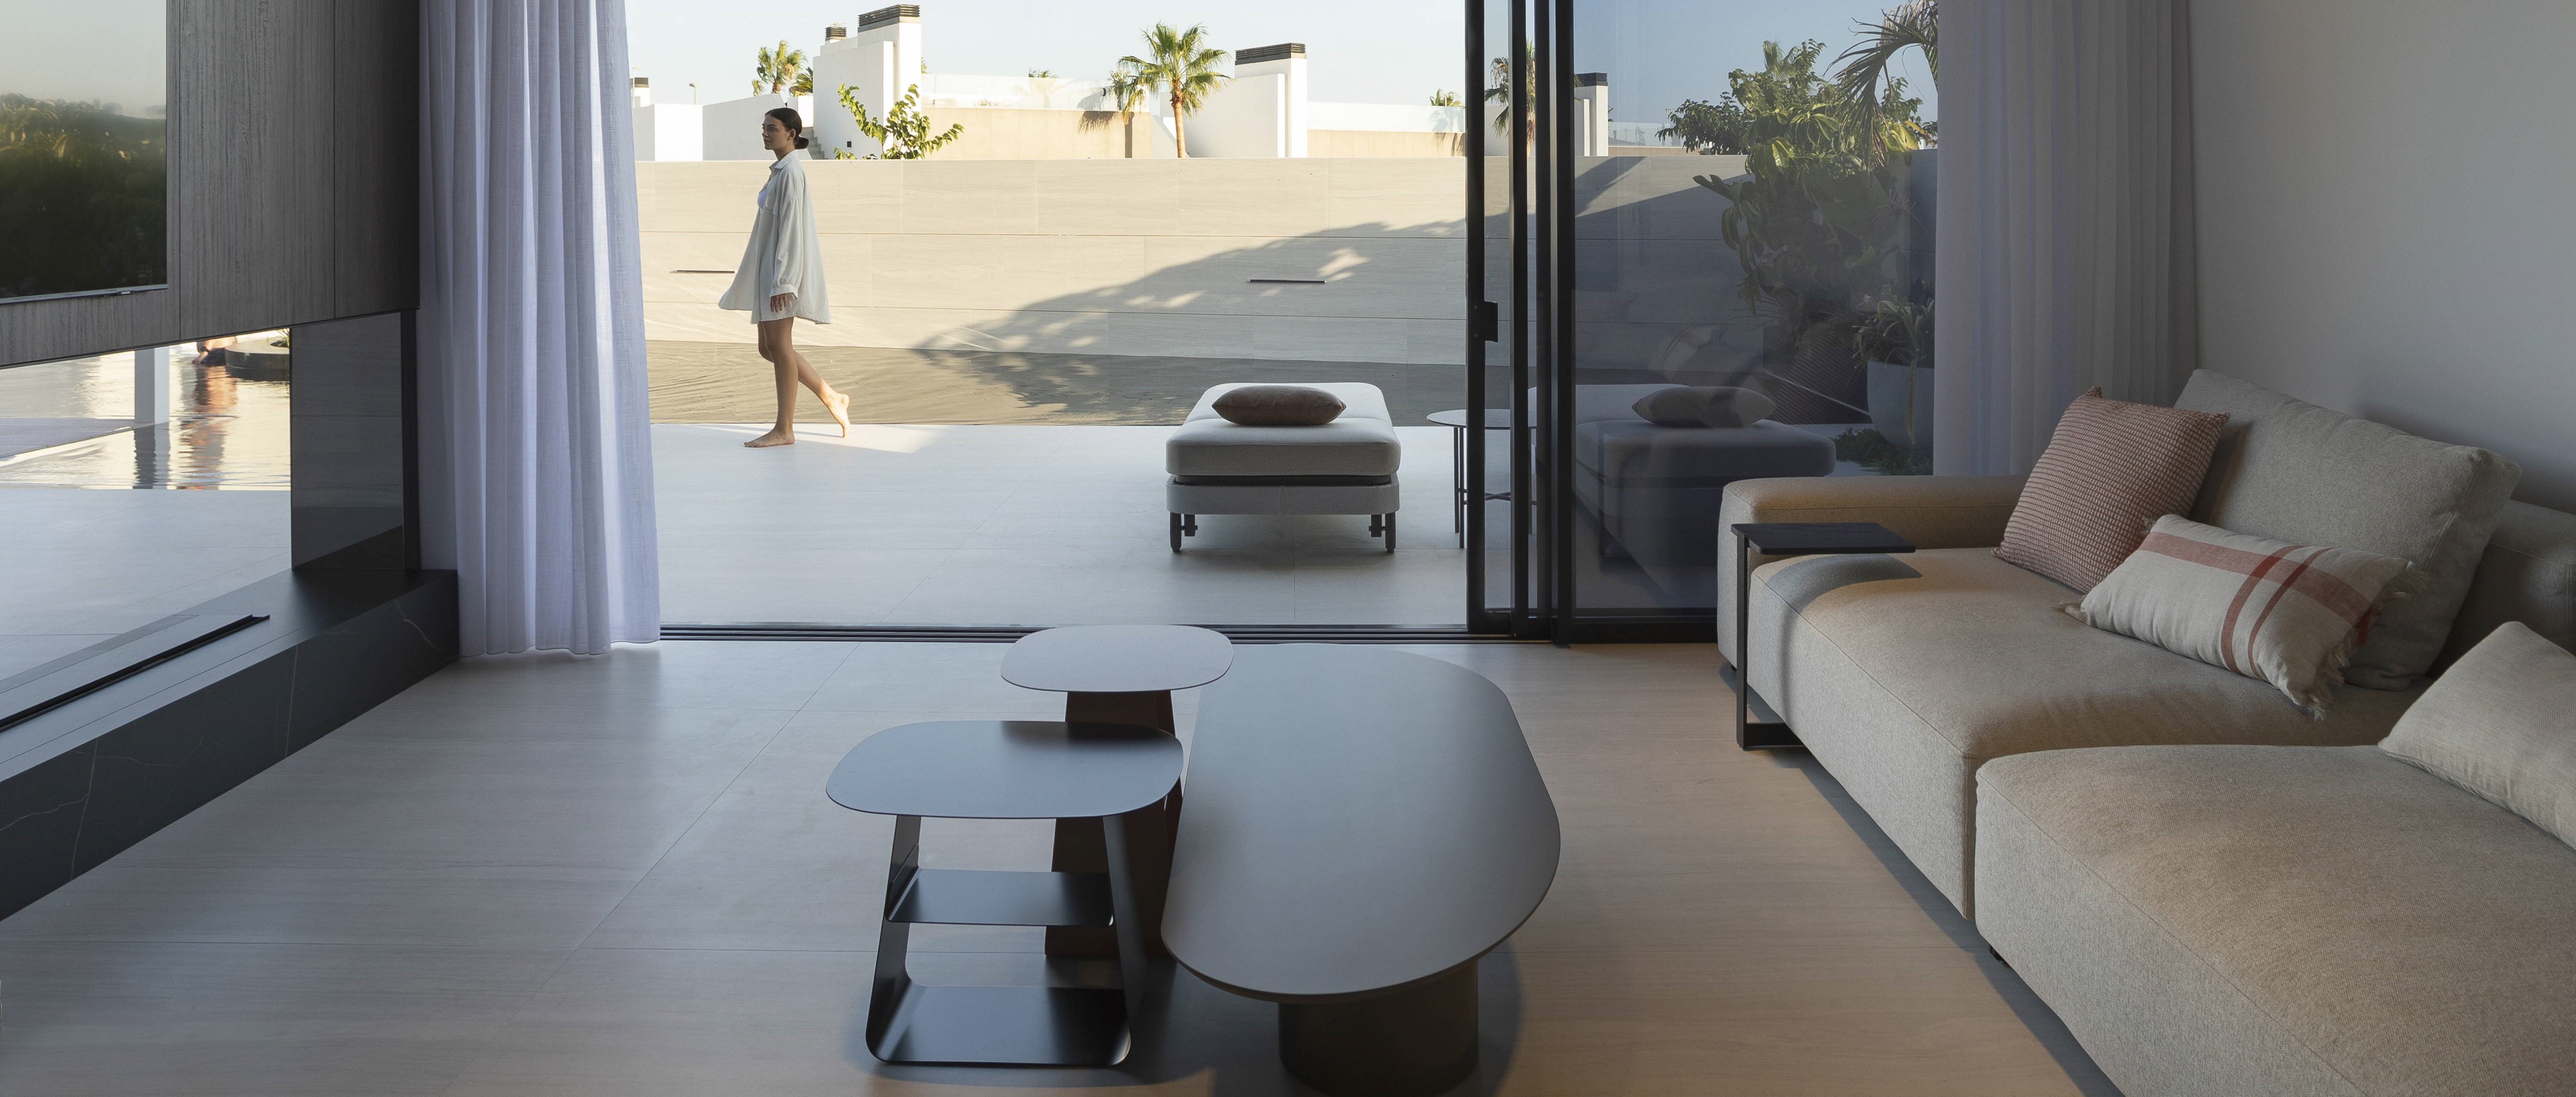 Simon colabora en “La Vivienda de Murcia” galardonada con el premio internacional Best Luxury Residential Interior Design